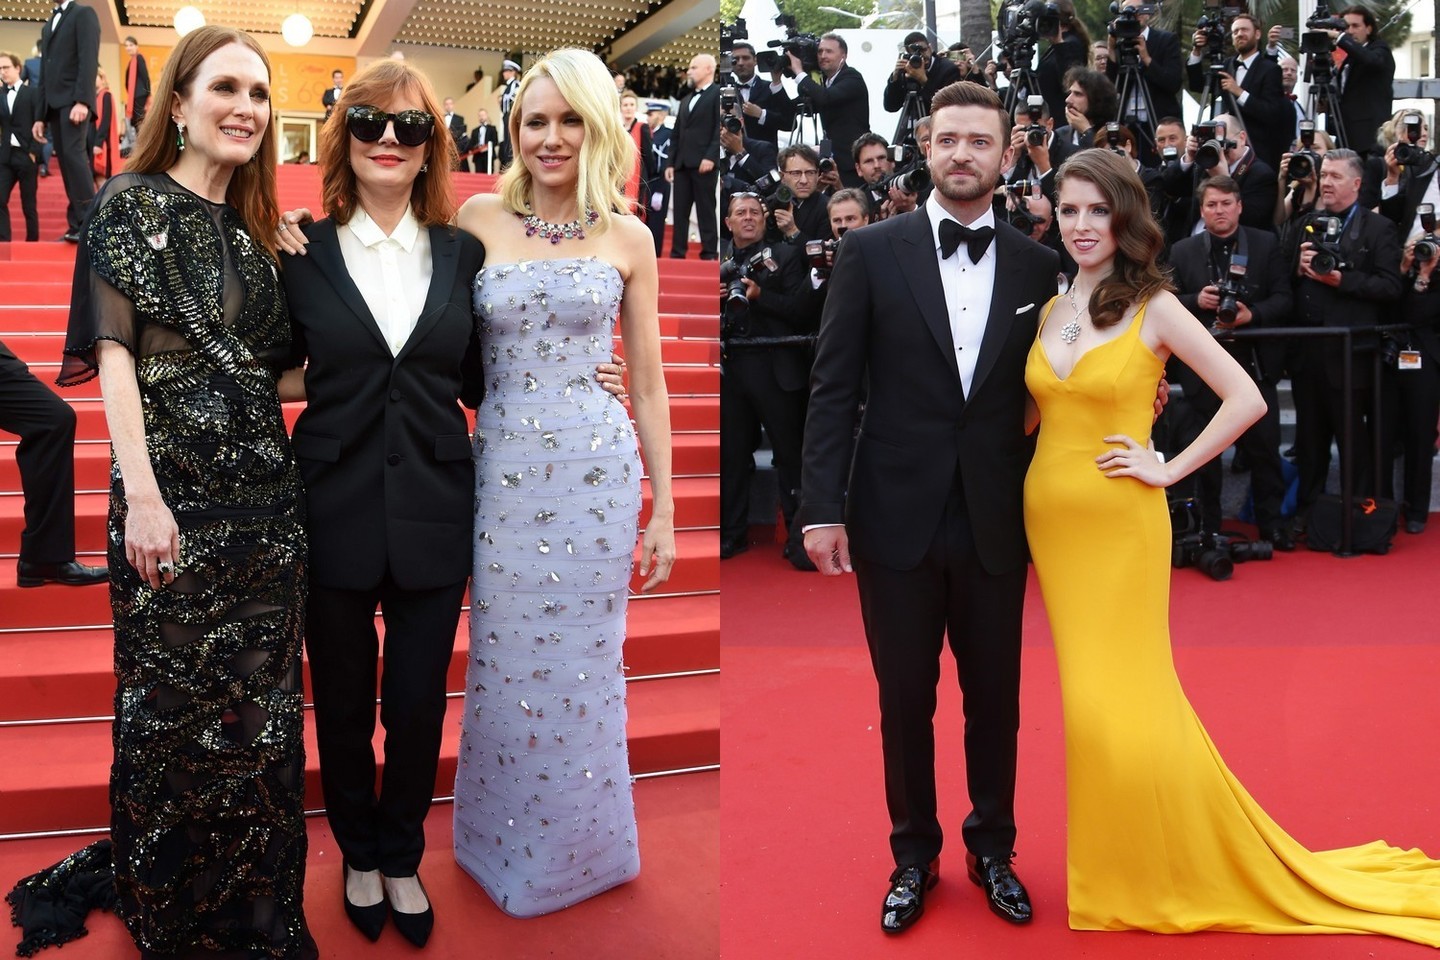 Iš kairės: Julianne Moore, Susan Sarandon, Naomi Watts, Justinas Timberlake'as ir Anna Kendrick.<br>„Scanpix“ nuotr.